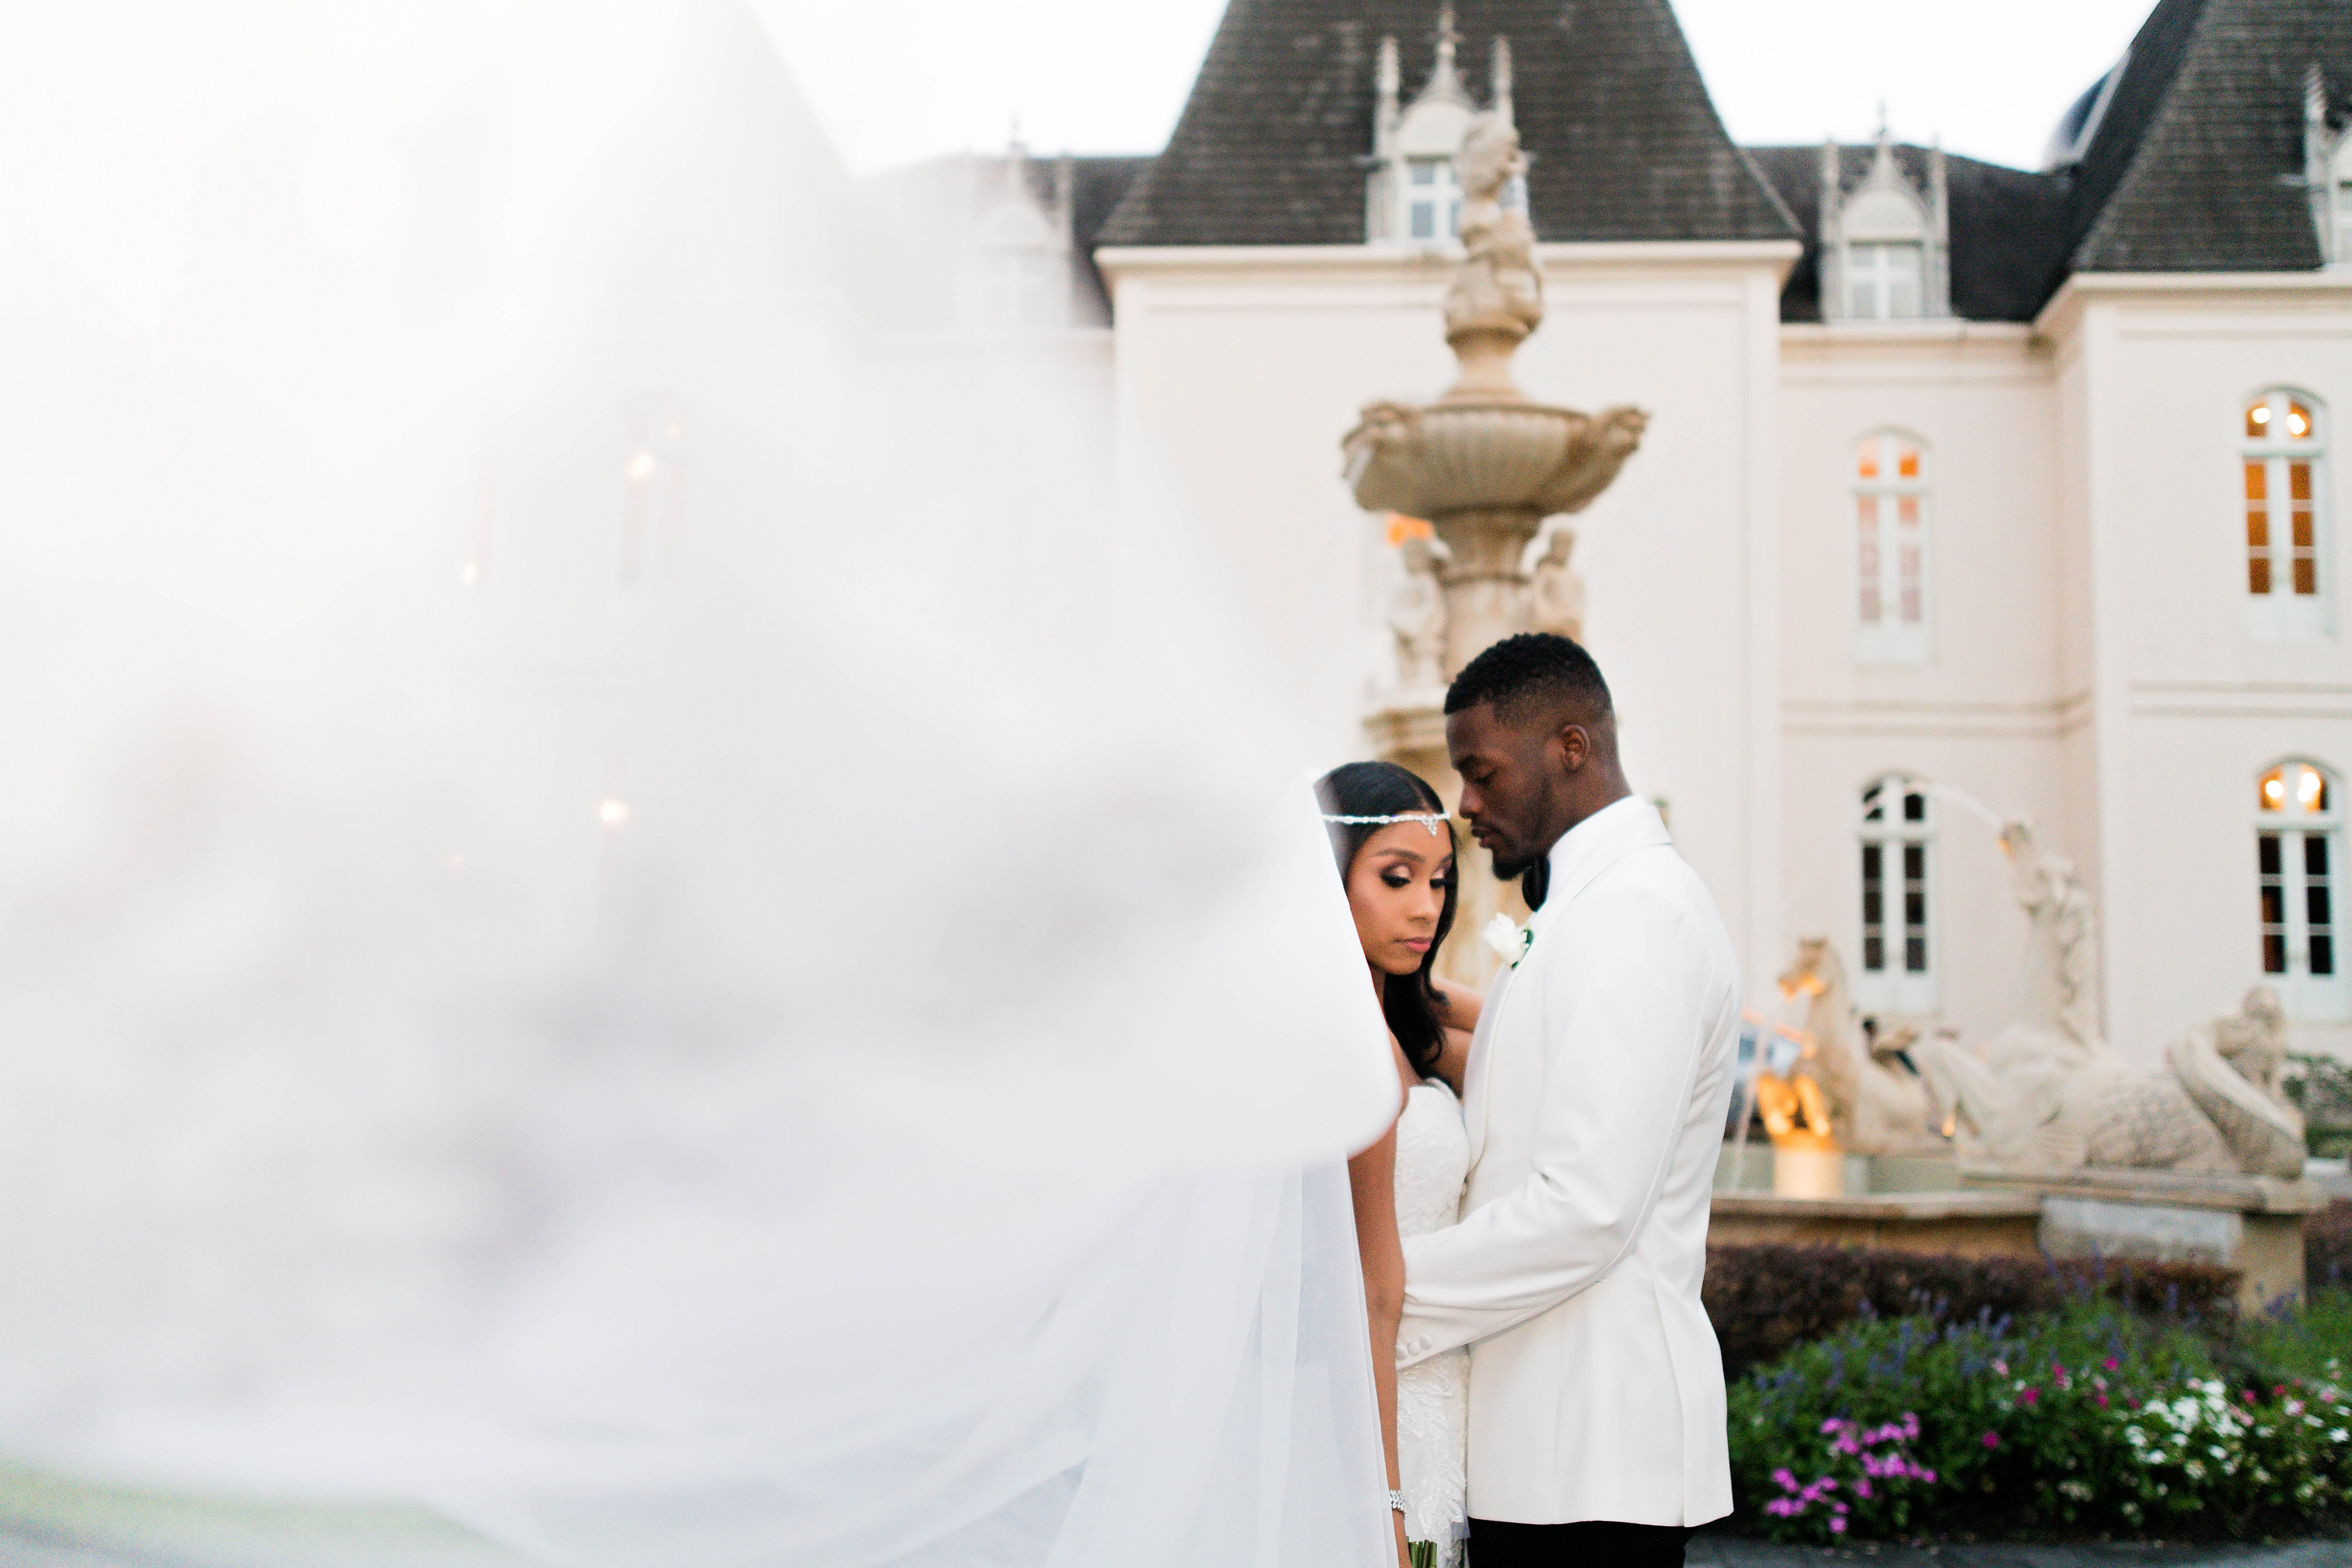 Romantic wedding photo at a Castle - Photography: Pharris Photos